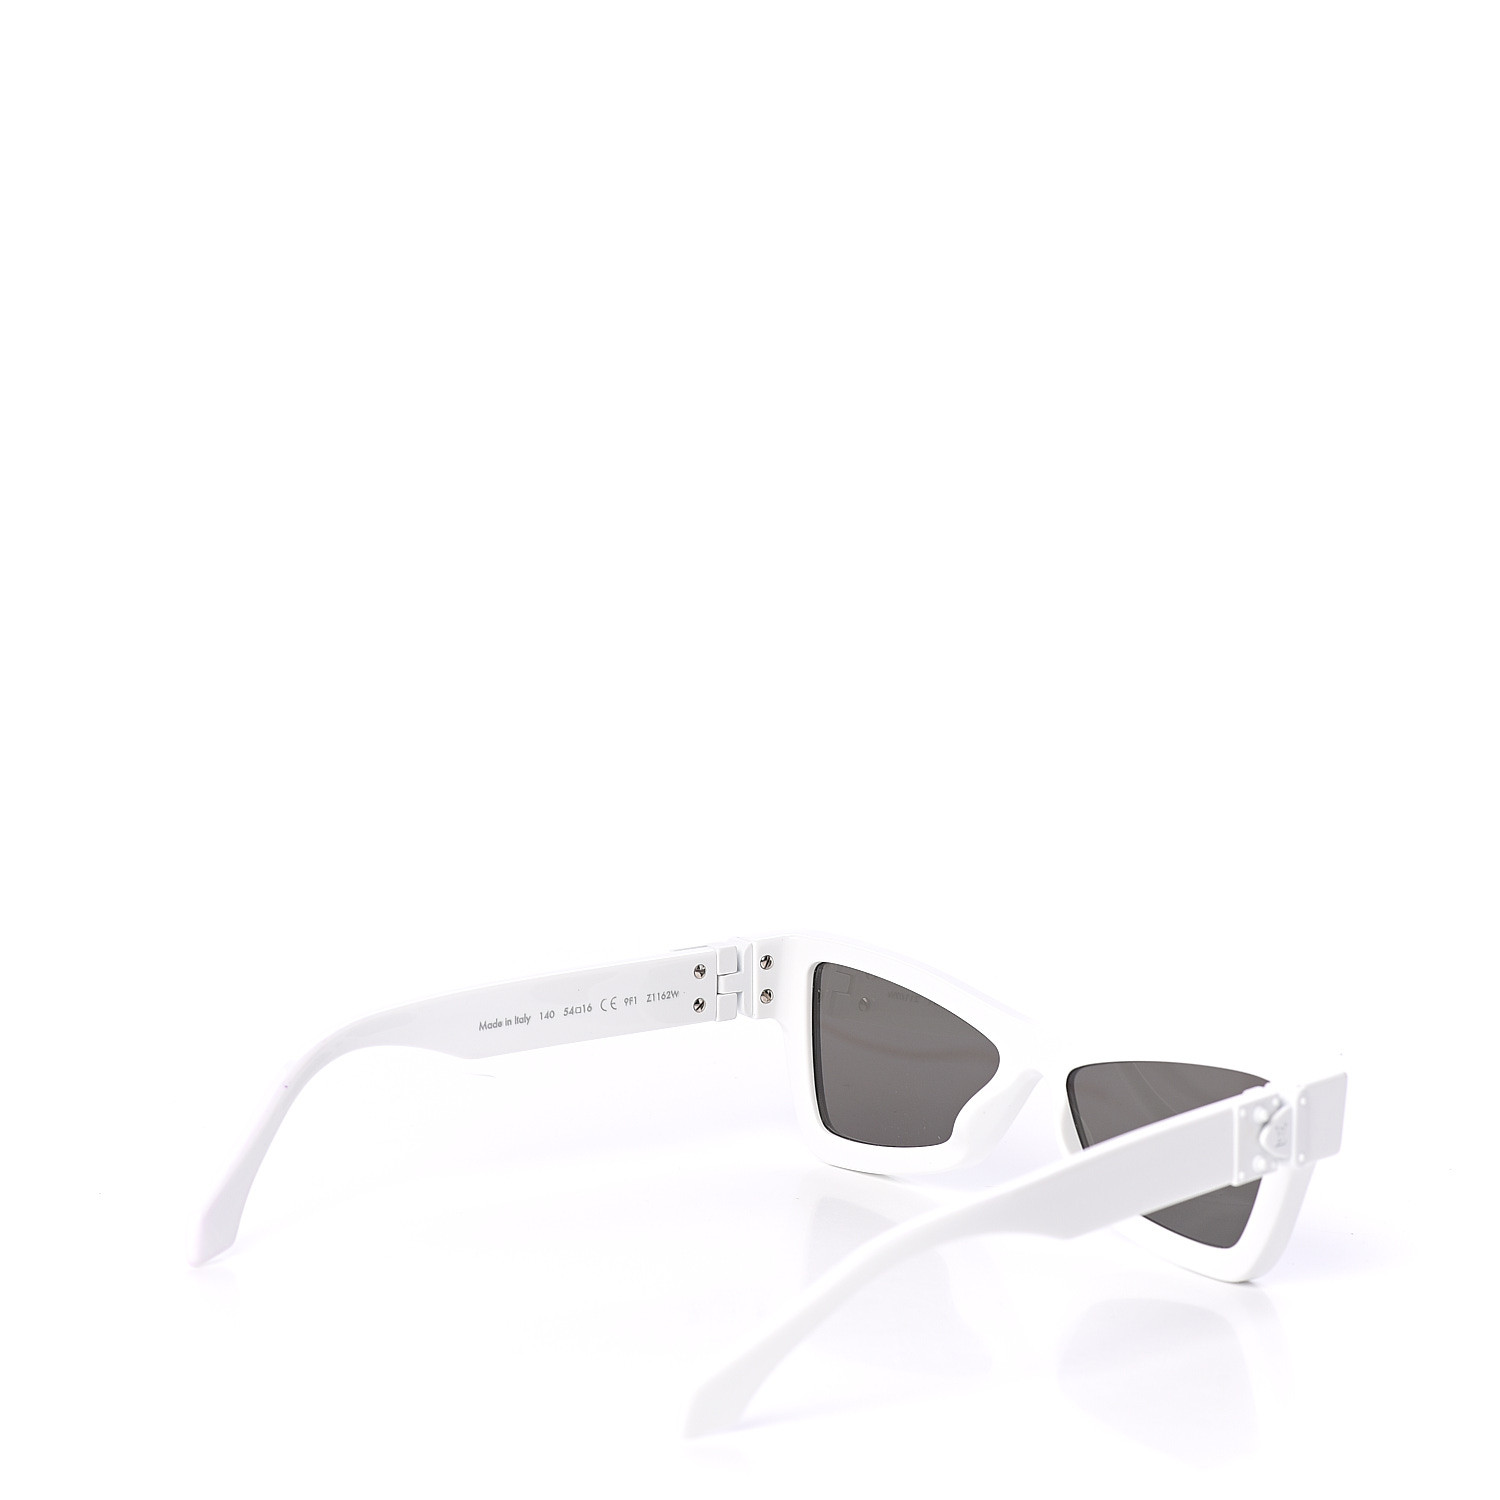 Cyclone Mask Sunglasses S00 - Accessories